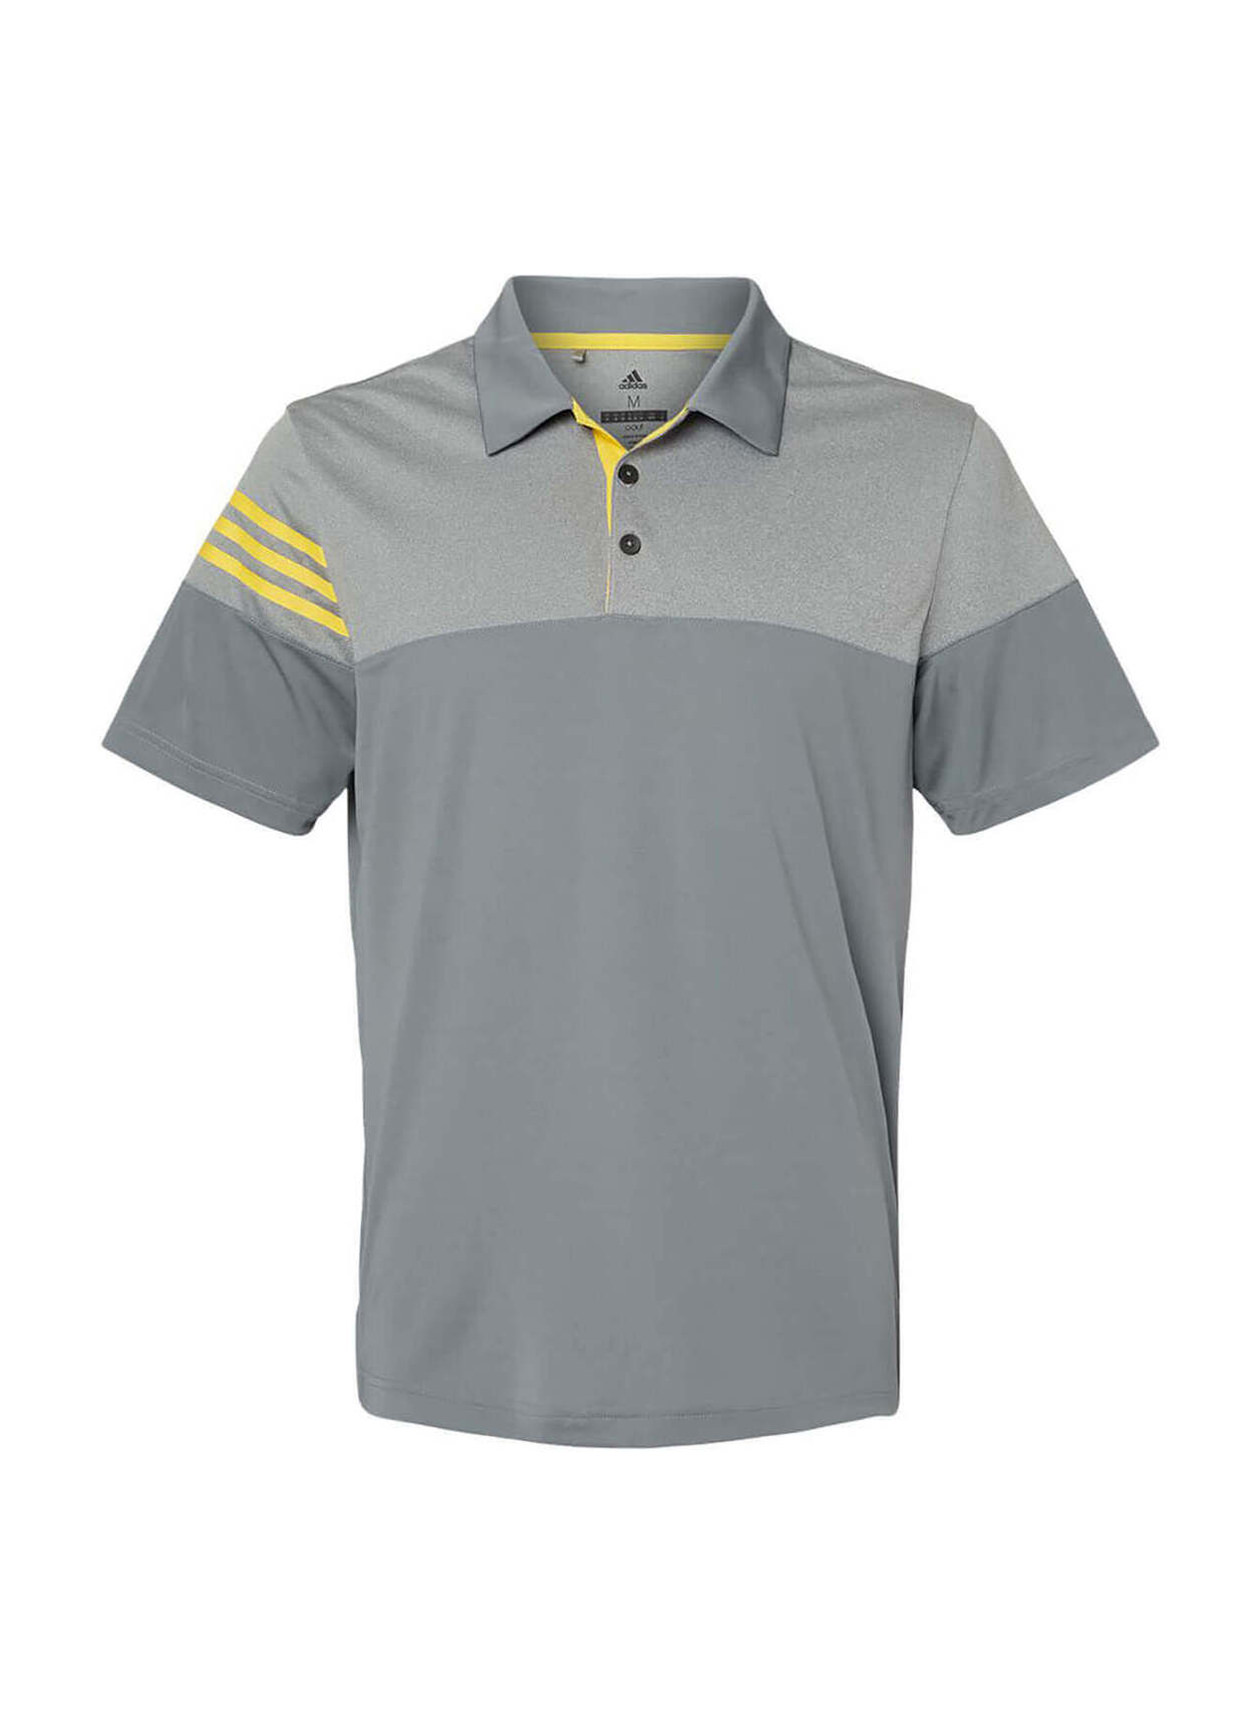 Adidas Men's Vista Grey / EQT Yellow Heathered 3-Stripes Colorblock Polo